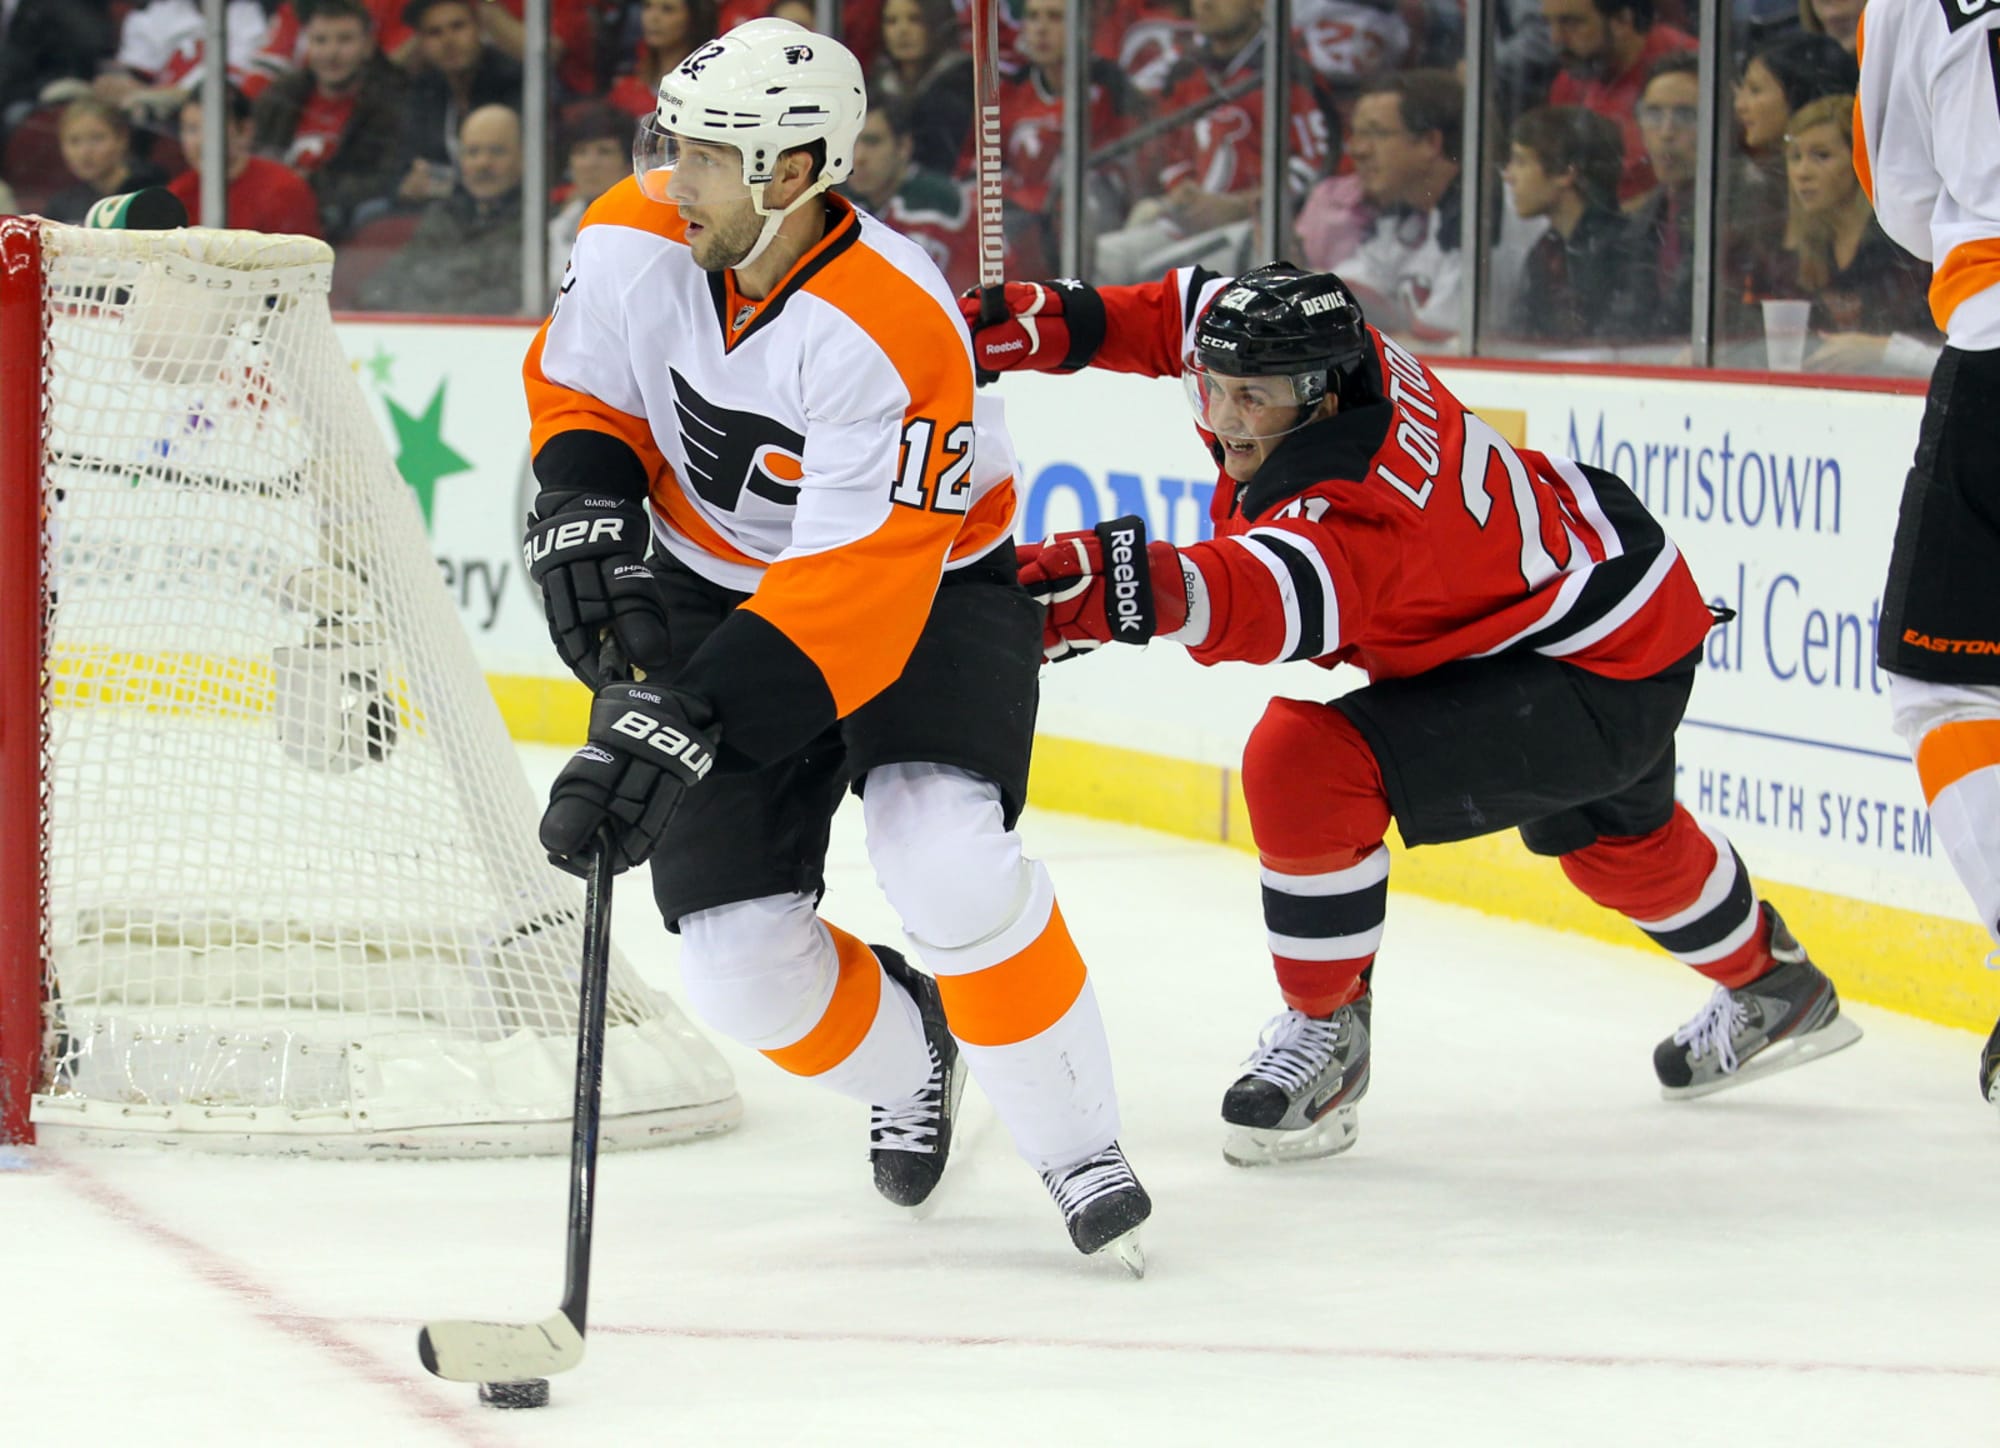 Simon Gagne scores in his return as the Philadelphia Flyers